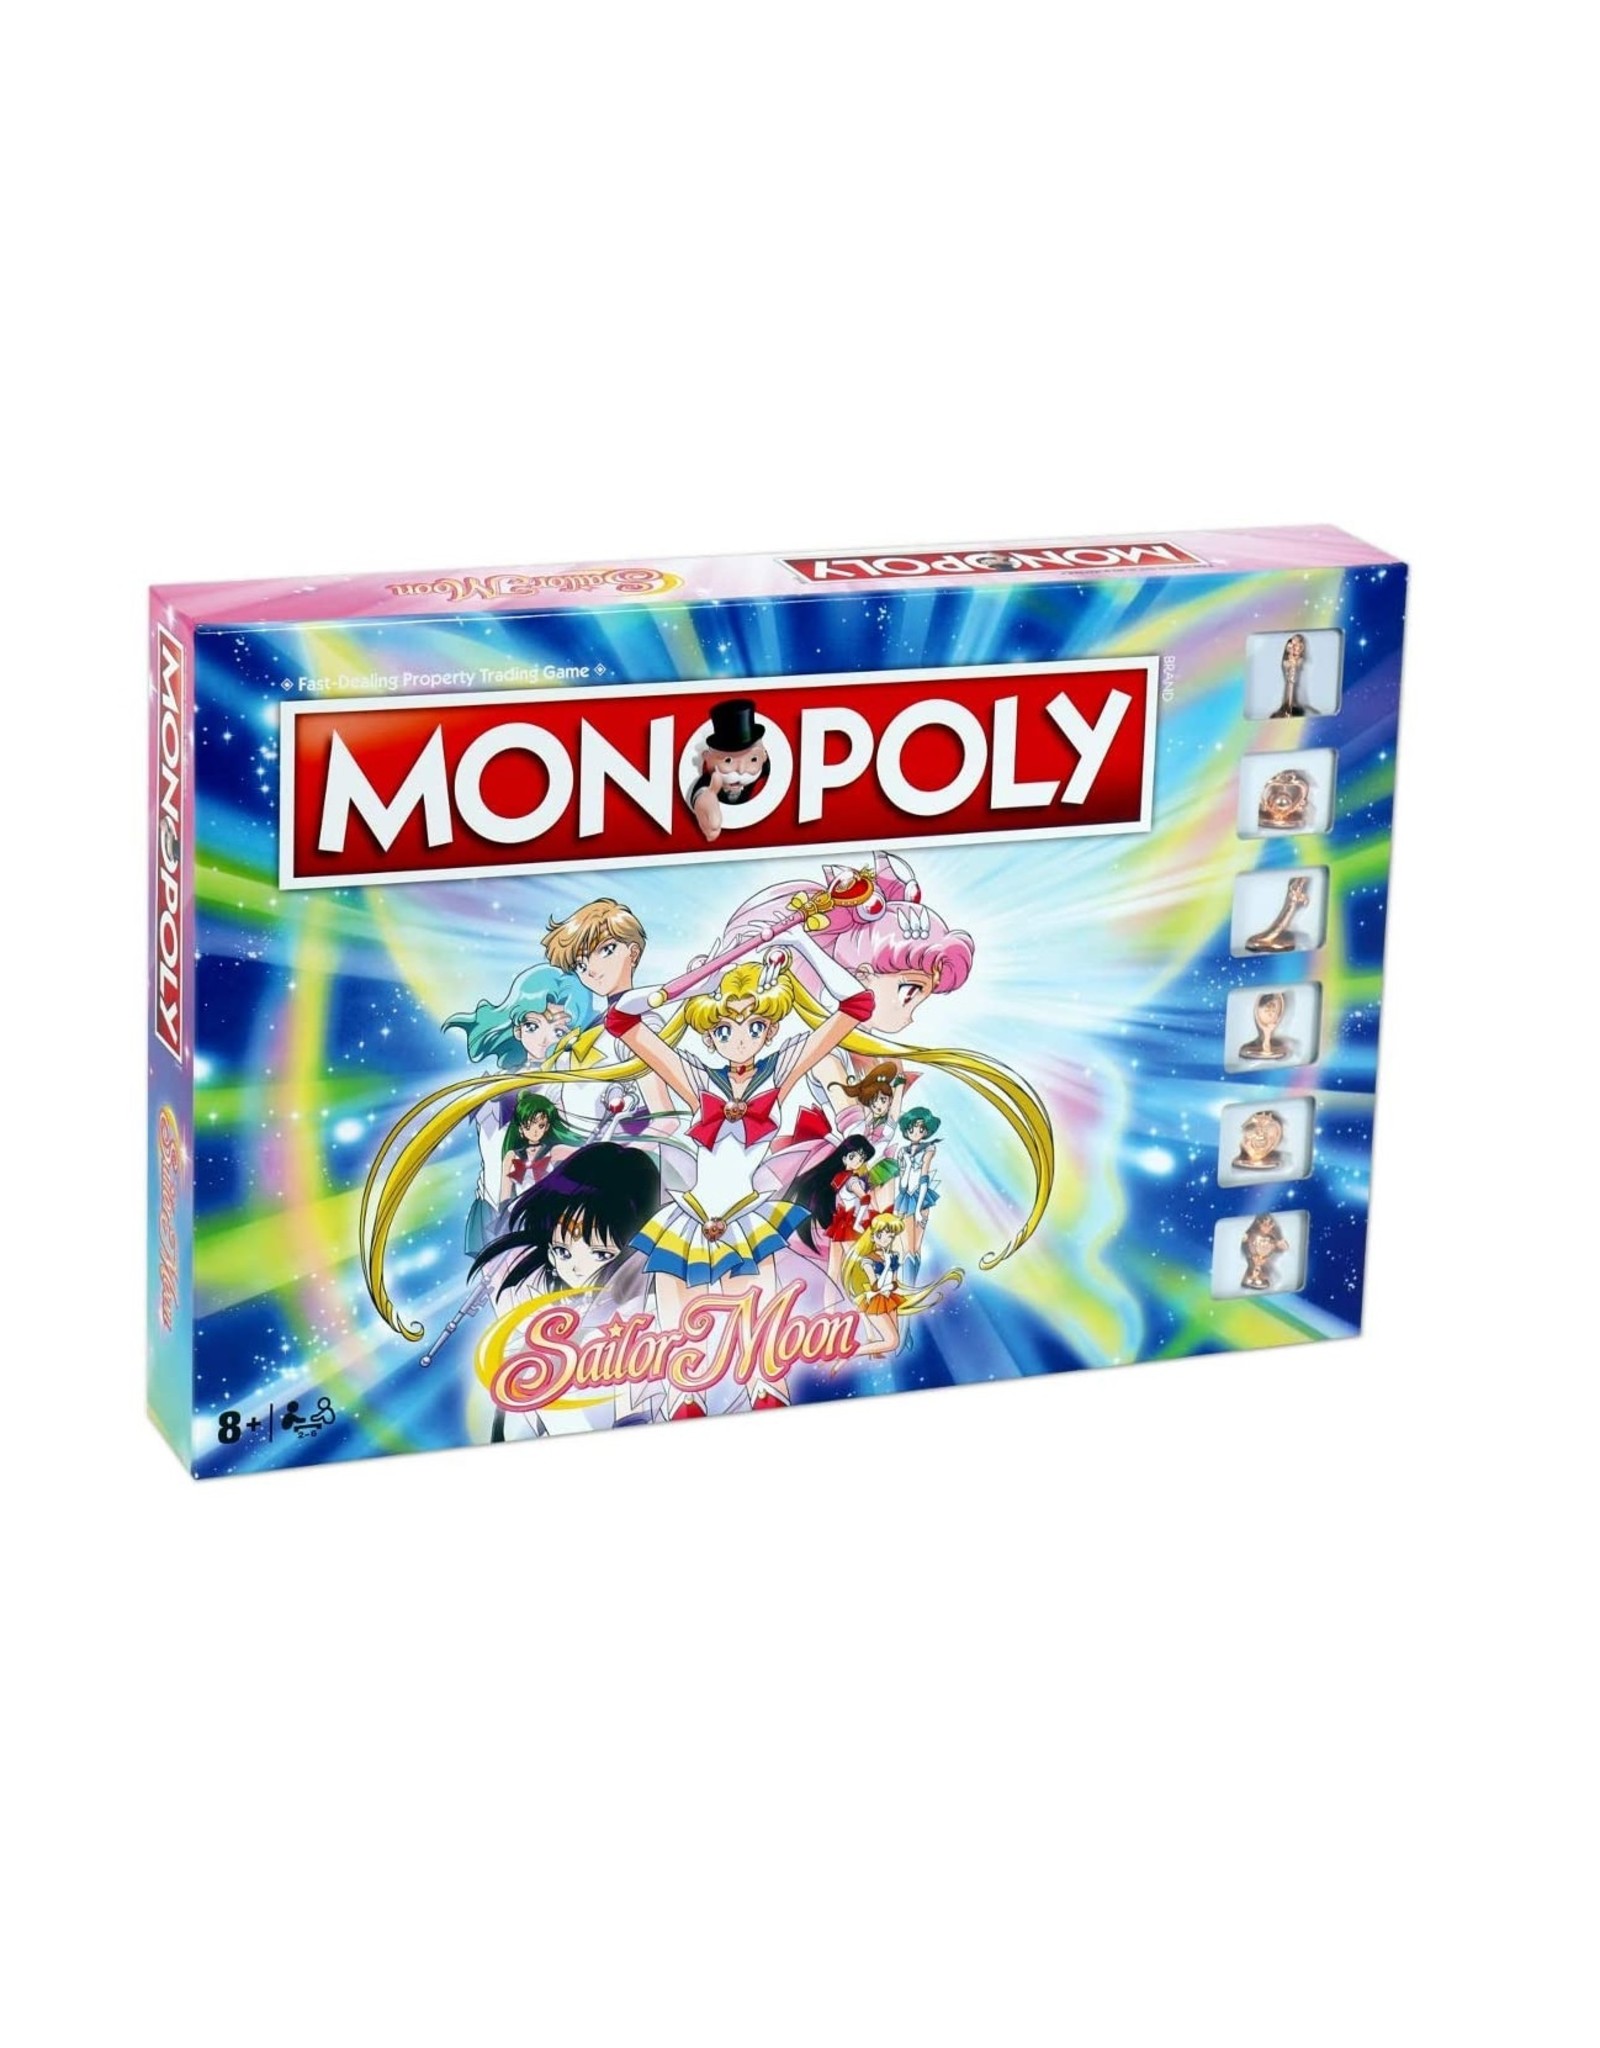 Monopoly Monopoly - Sailor Moon - Bordspel - Engelstalige versie